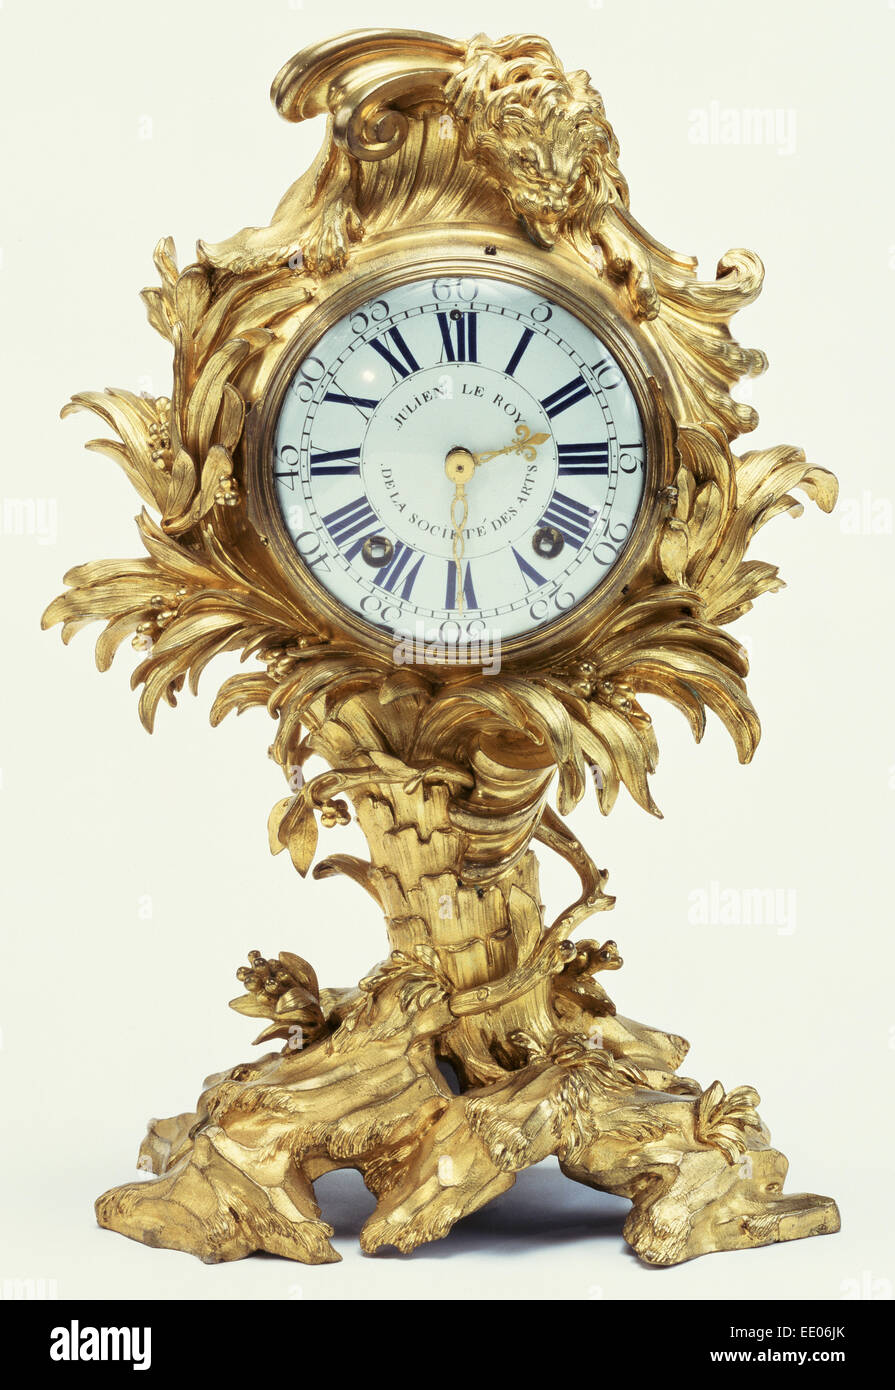 A Louis XV gilt-bronze cartel clock, by Louis-Nicholas Delaunay